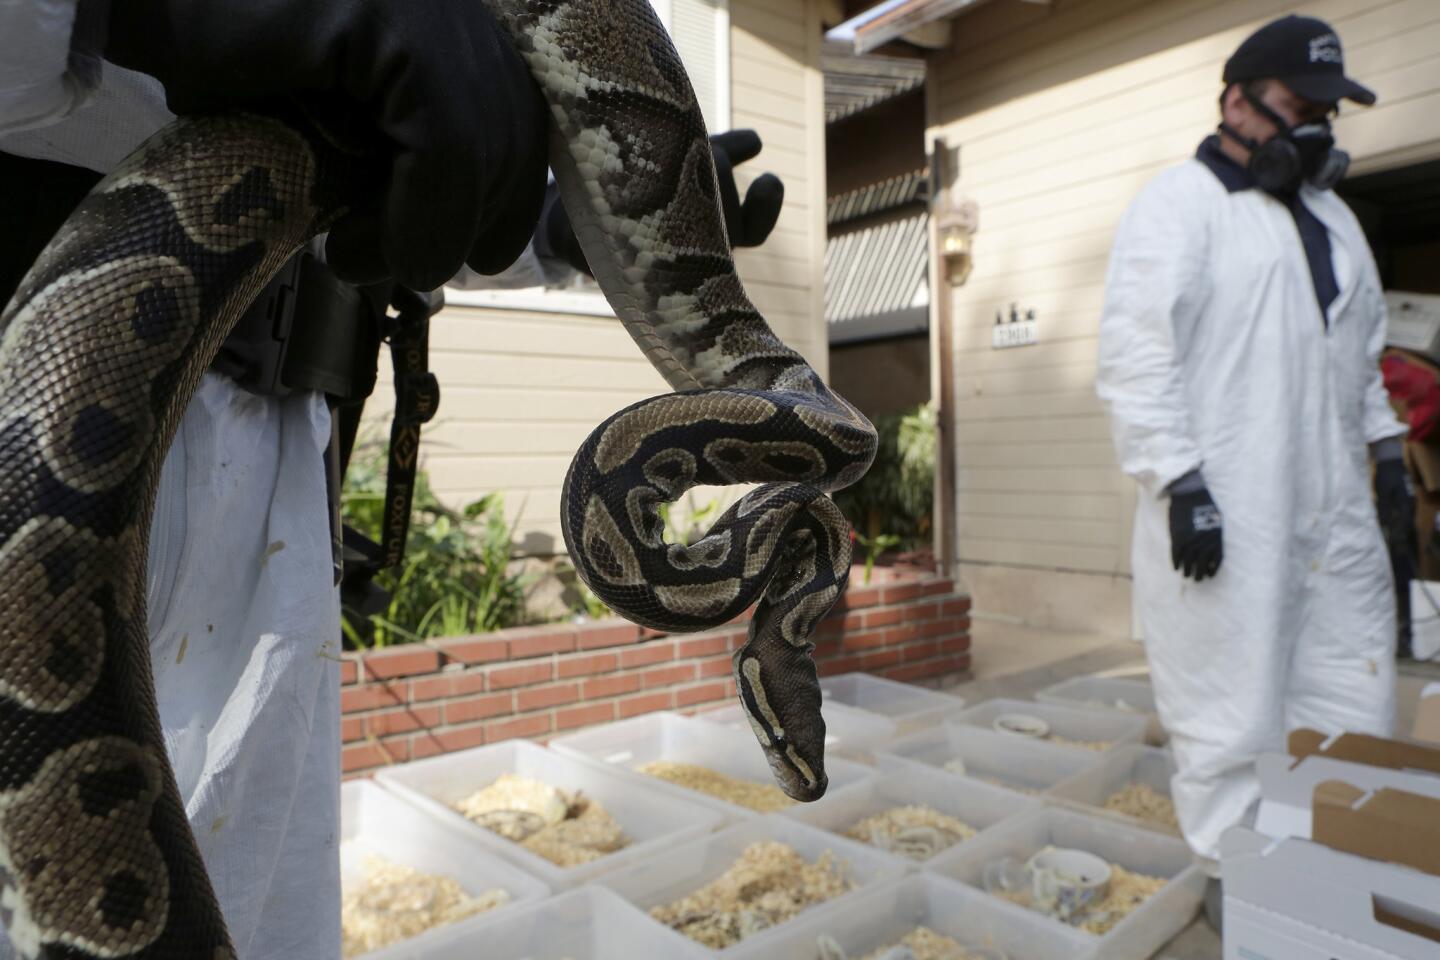 Snakes found in Santa Ana home